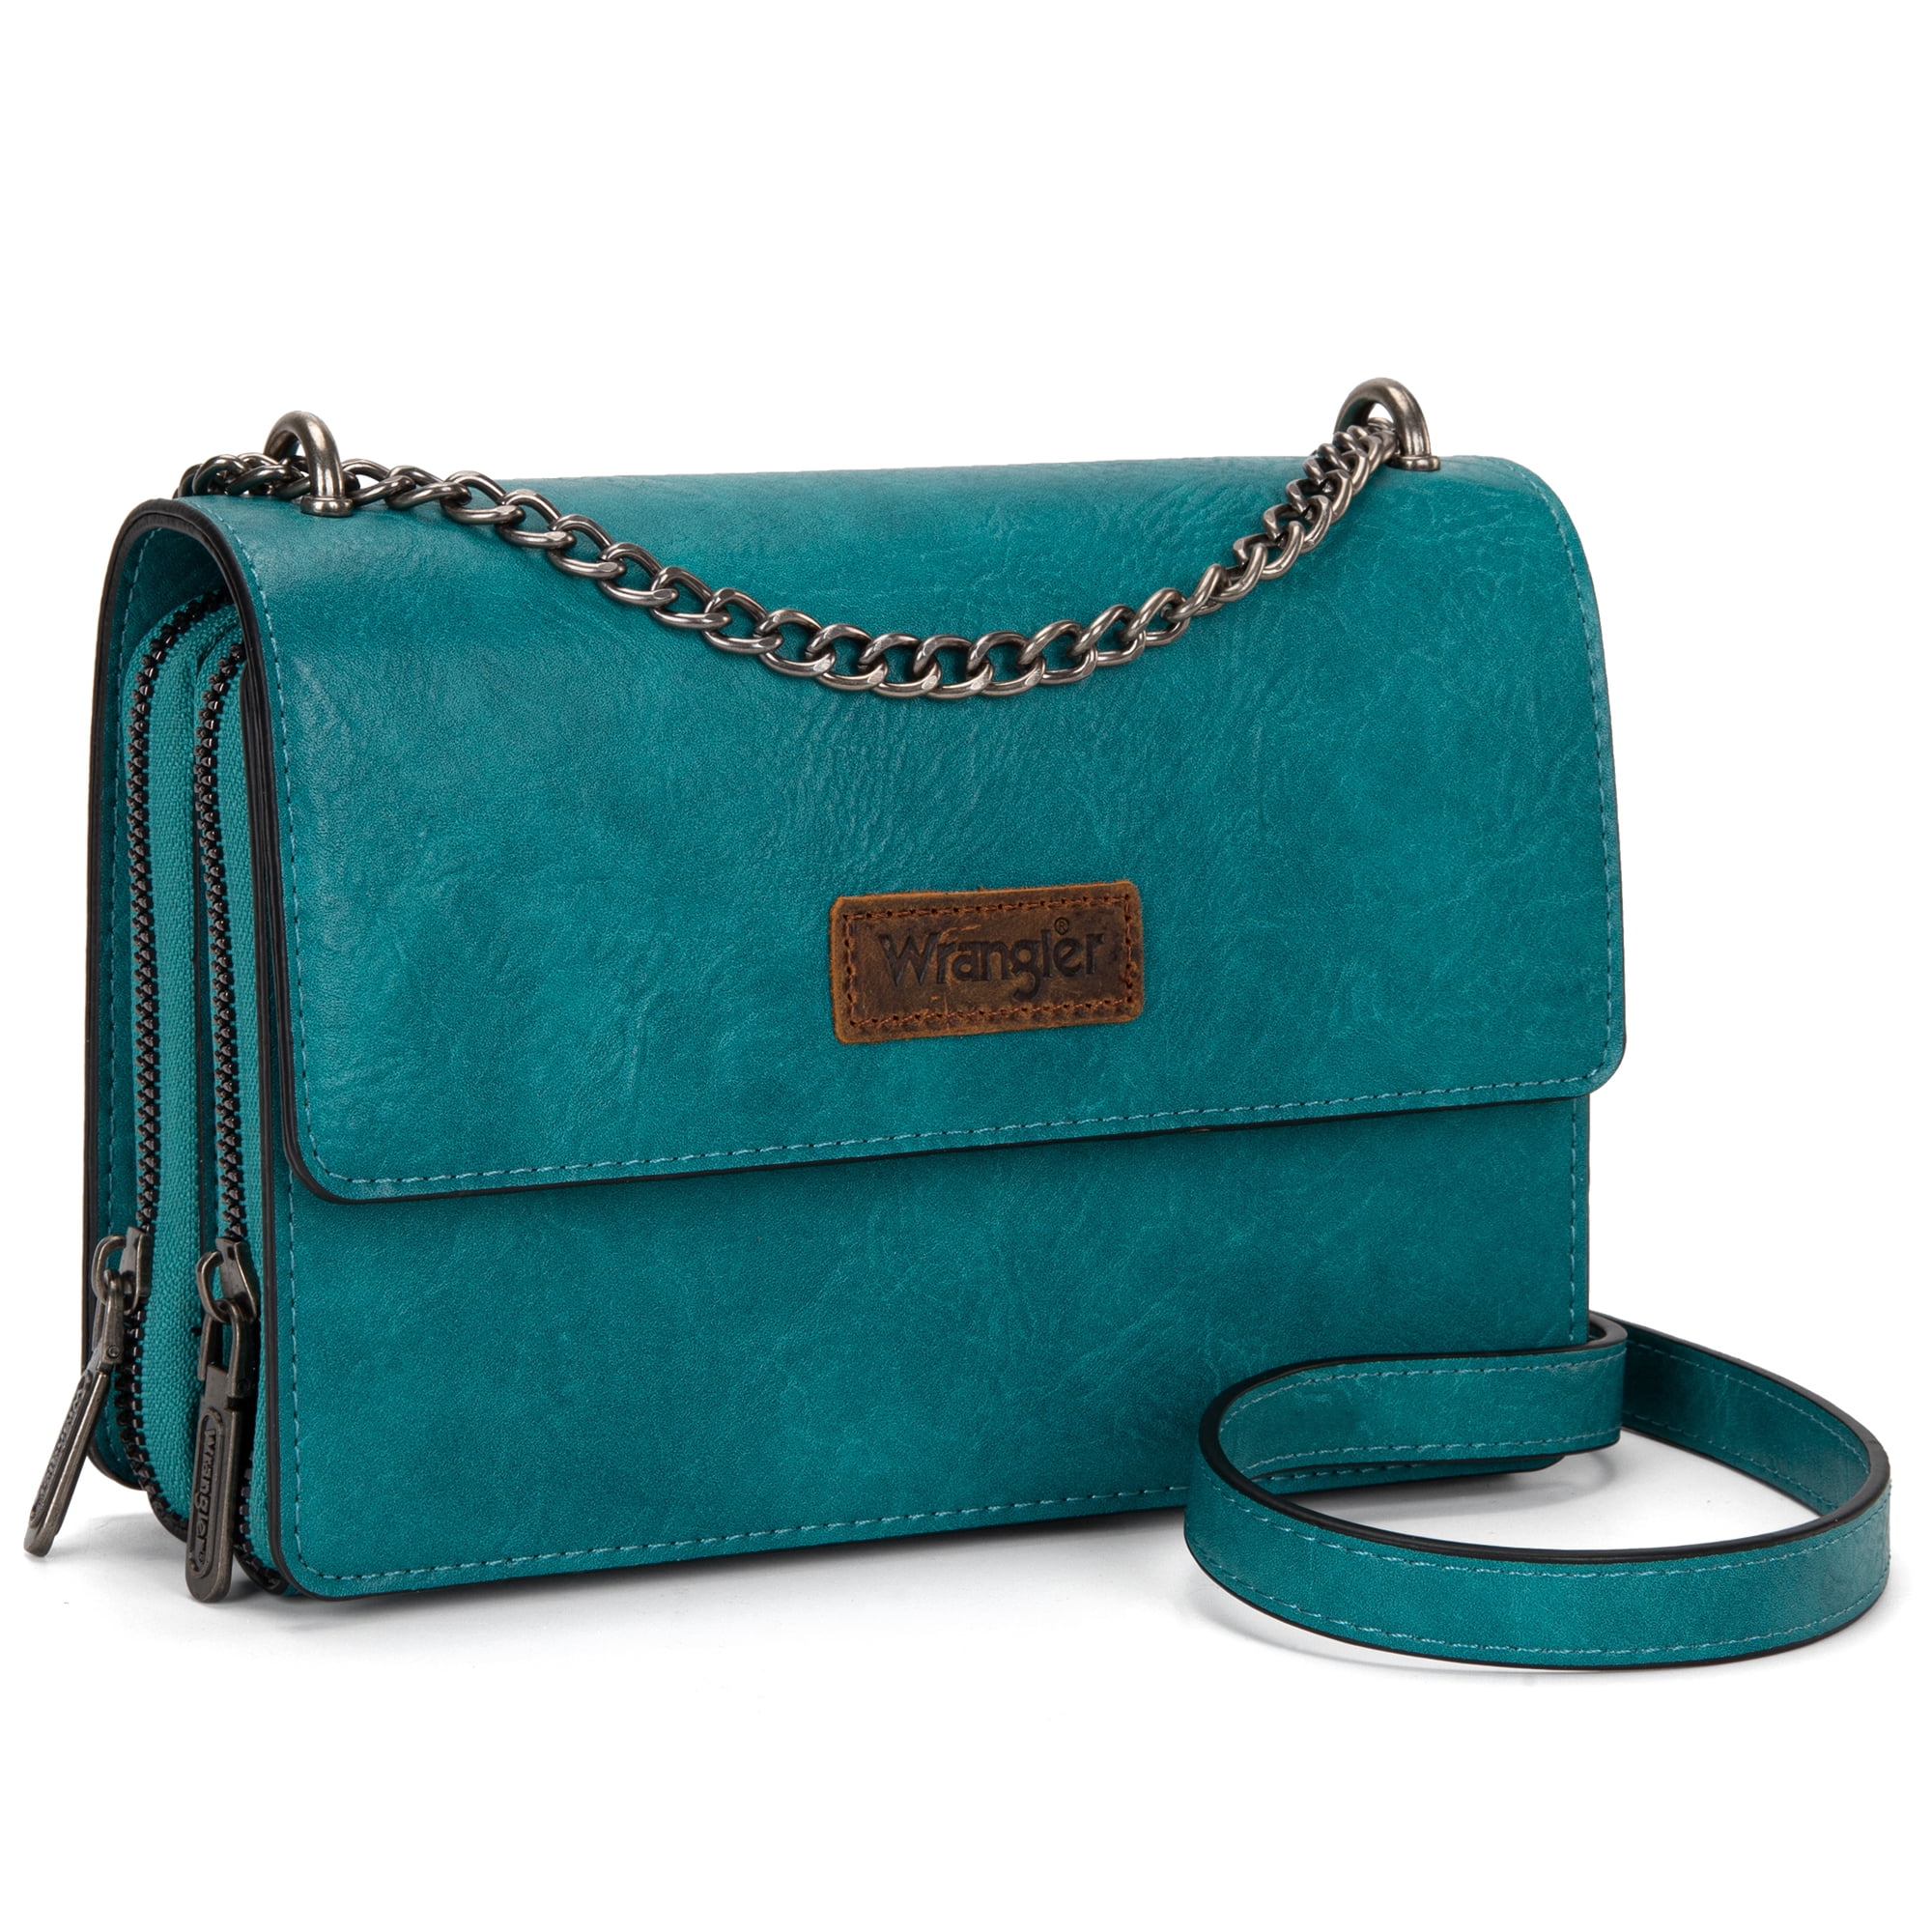 Vera Bradley Cest la Vie Crossbody Turquoise Bag Purse Shoulder Bag | eBay